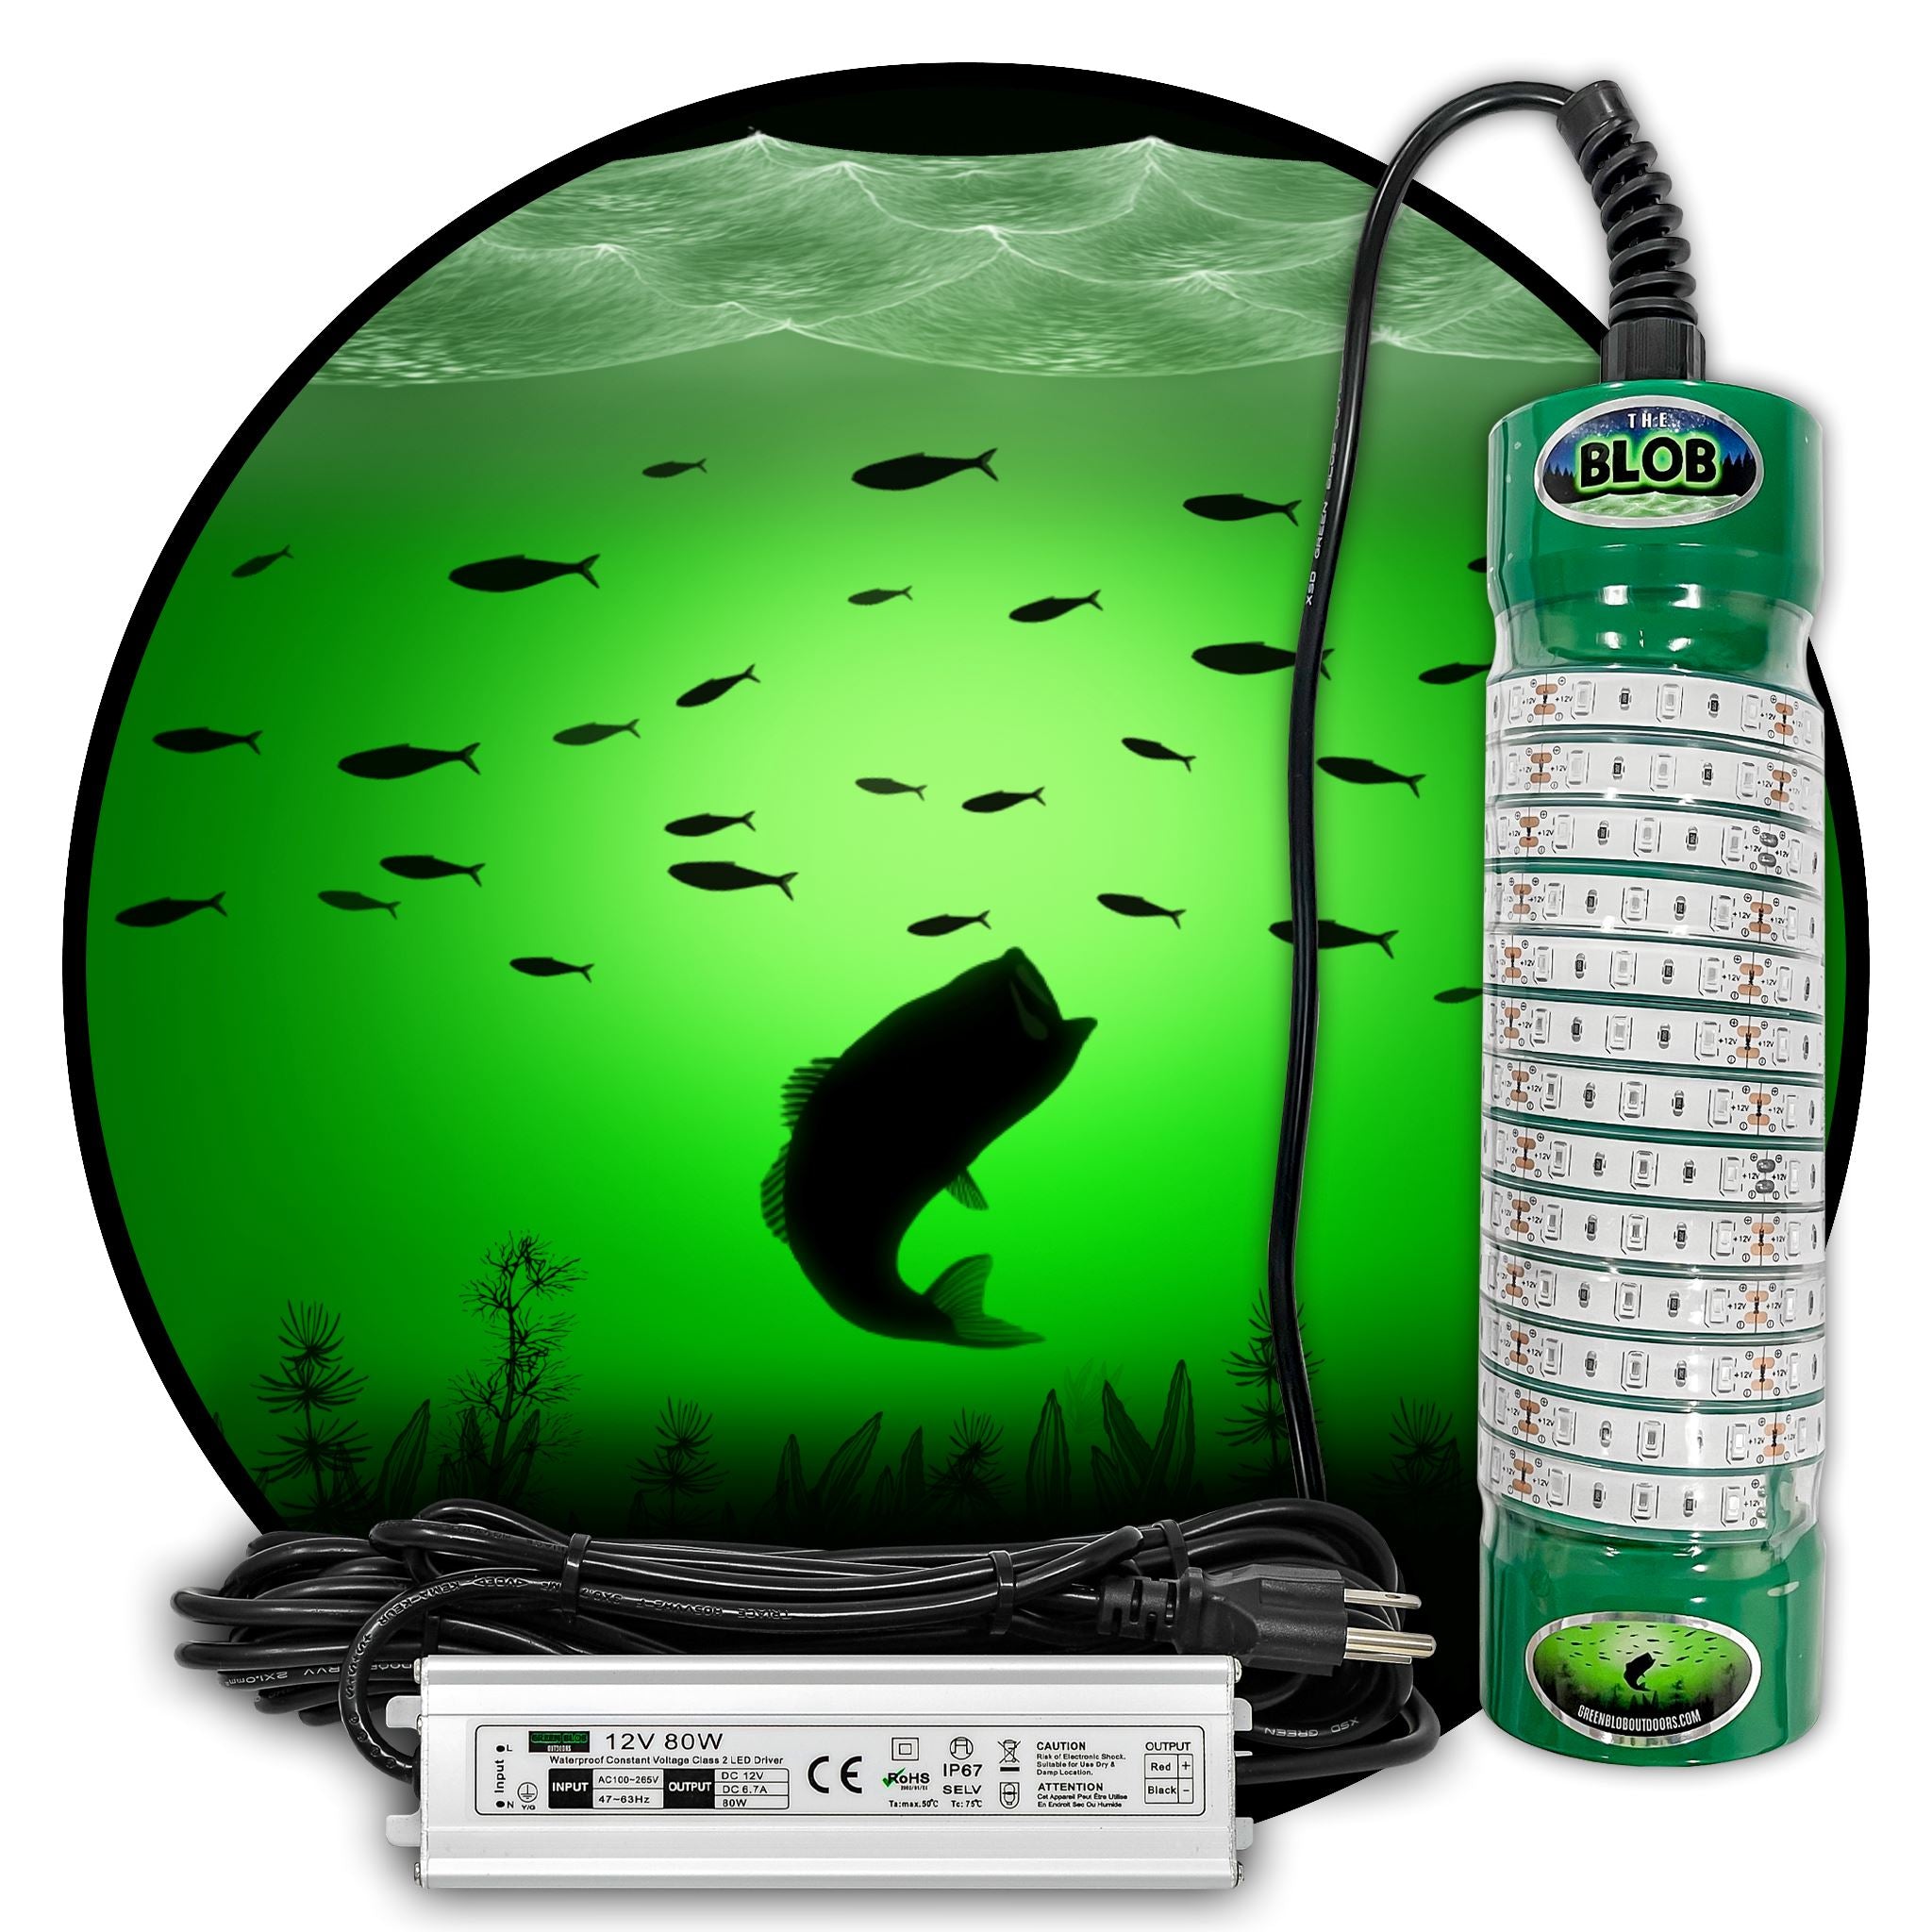 7500 Lumen Green Blob LED Underwater Fishing Light - Durable, Energy-E -  Green Blob Outdoors